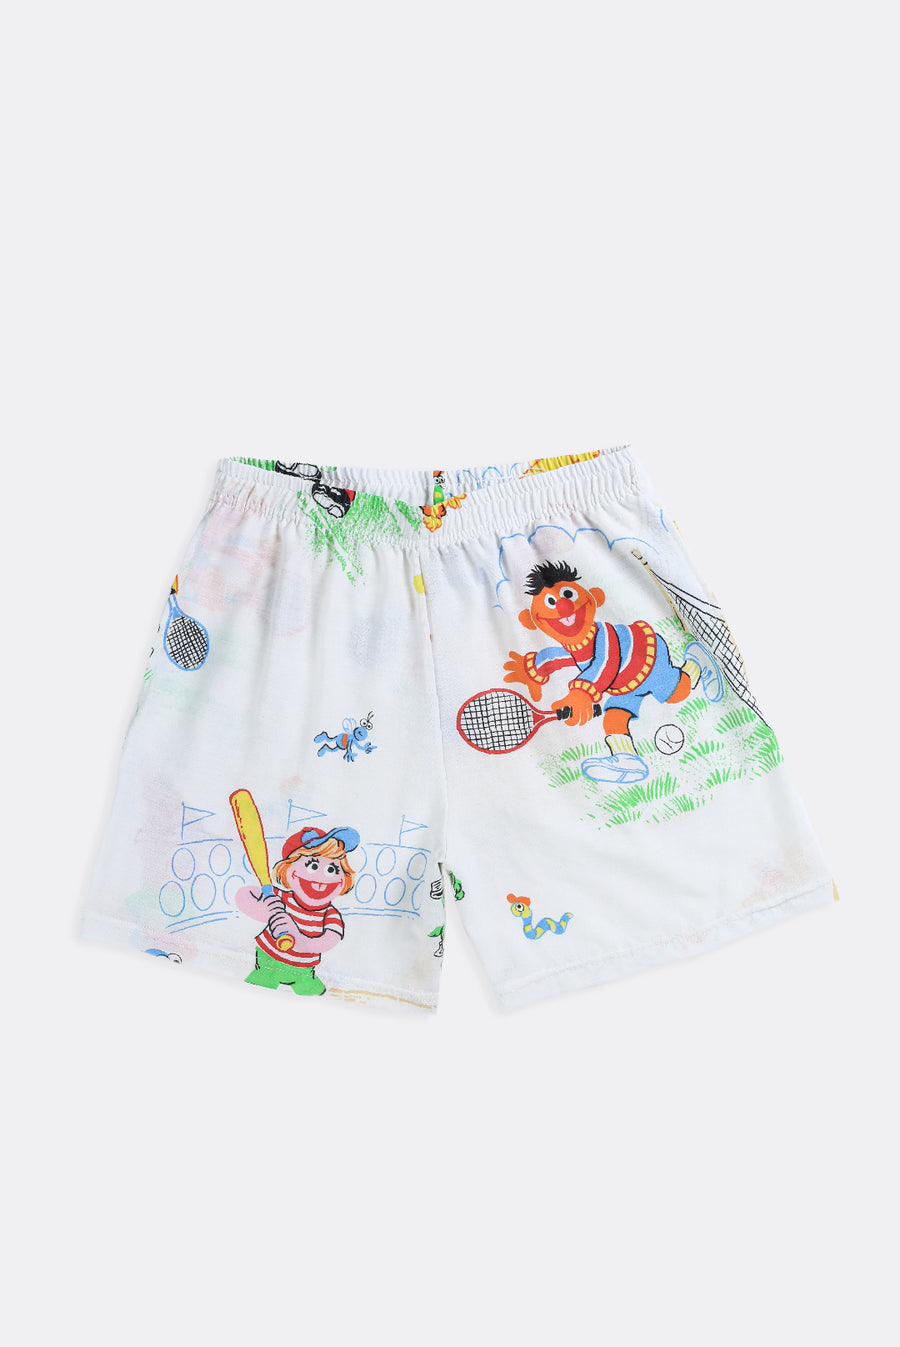 Unisex Rework Sesame Street Boxer Shorts - XS, S, M, L